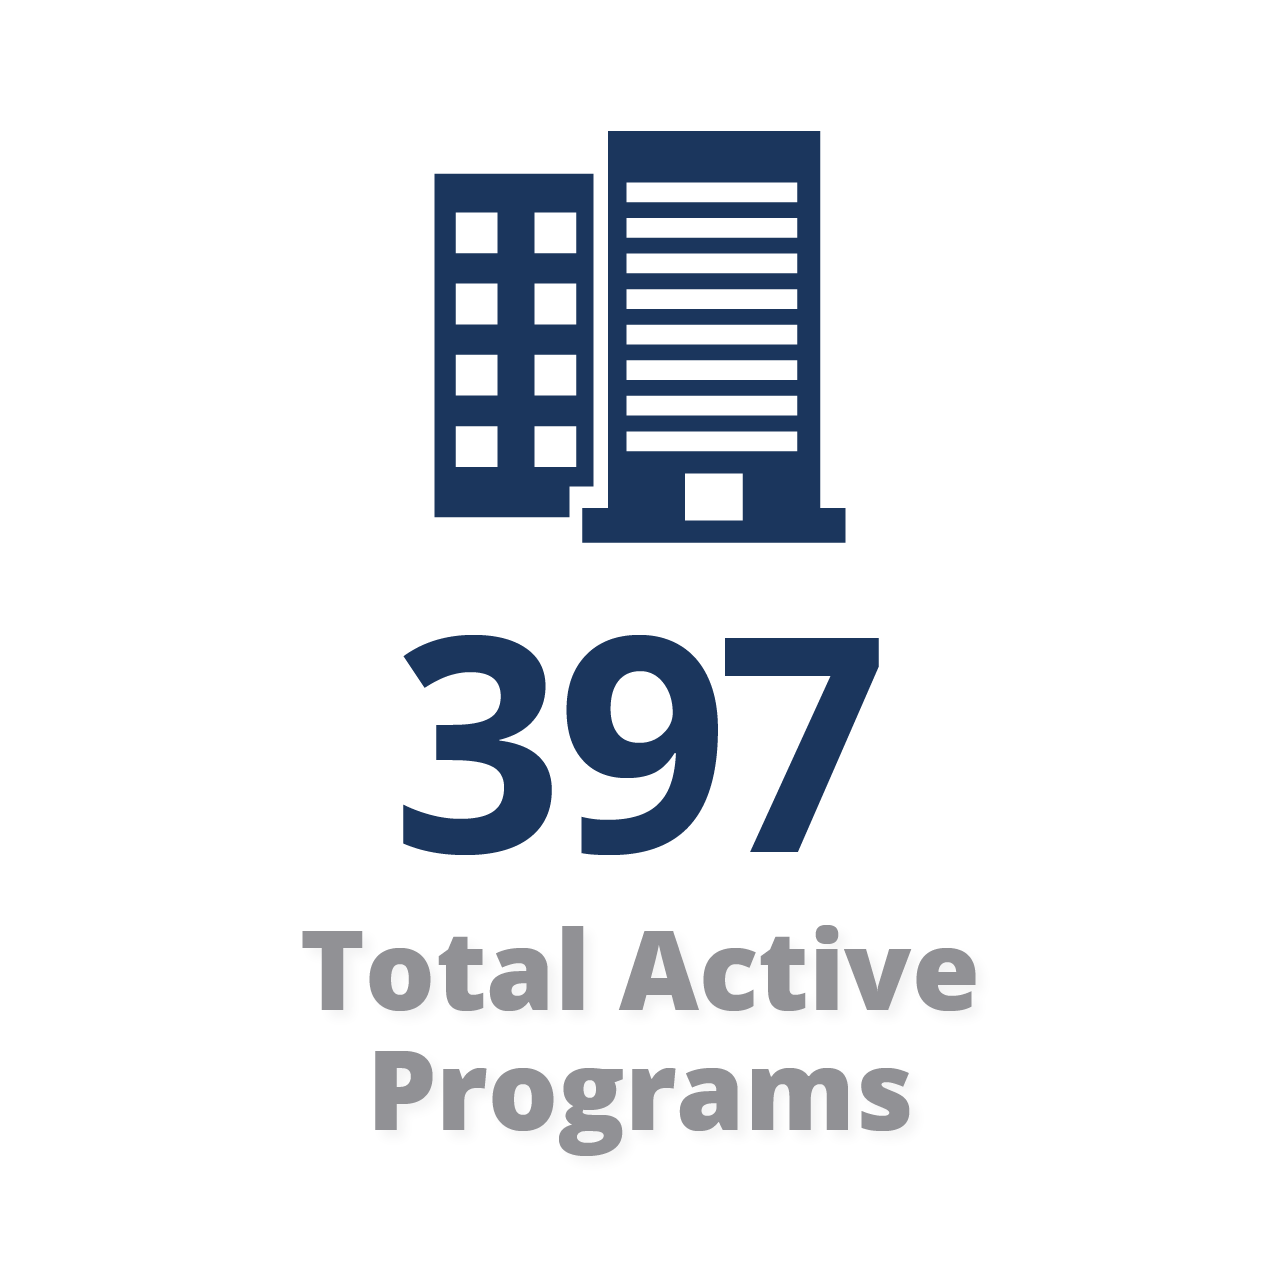  364 Total Active Programs